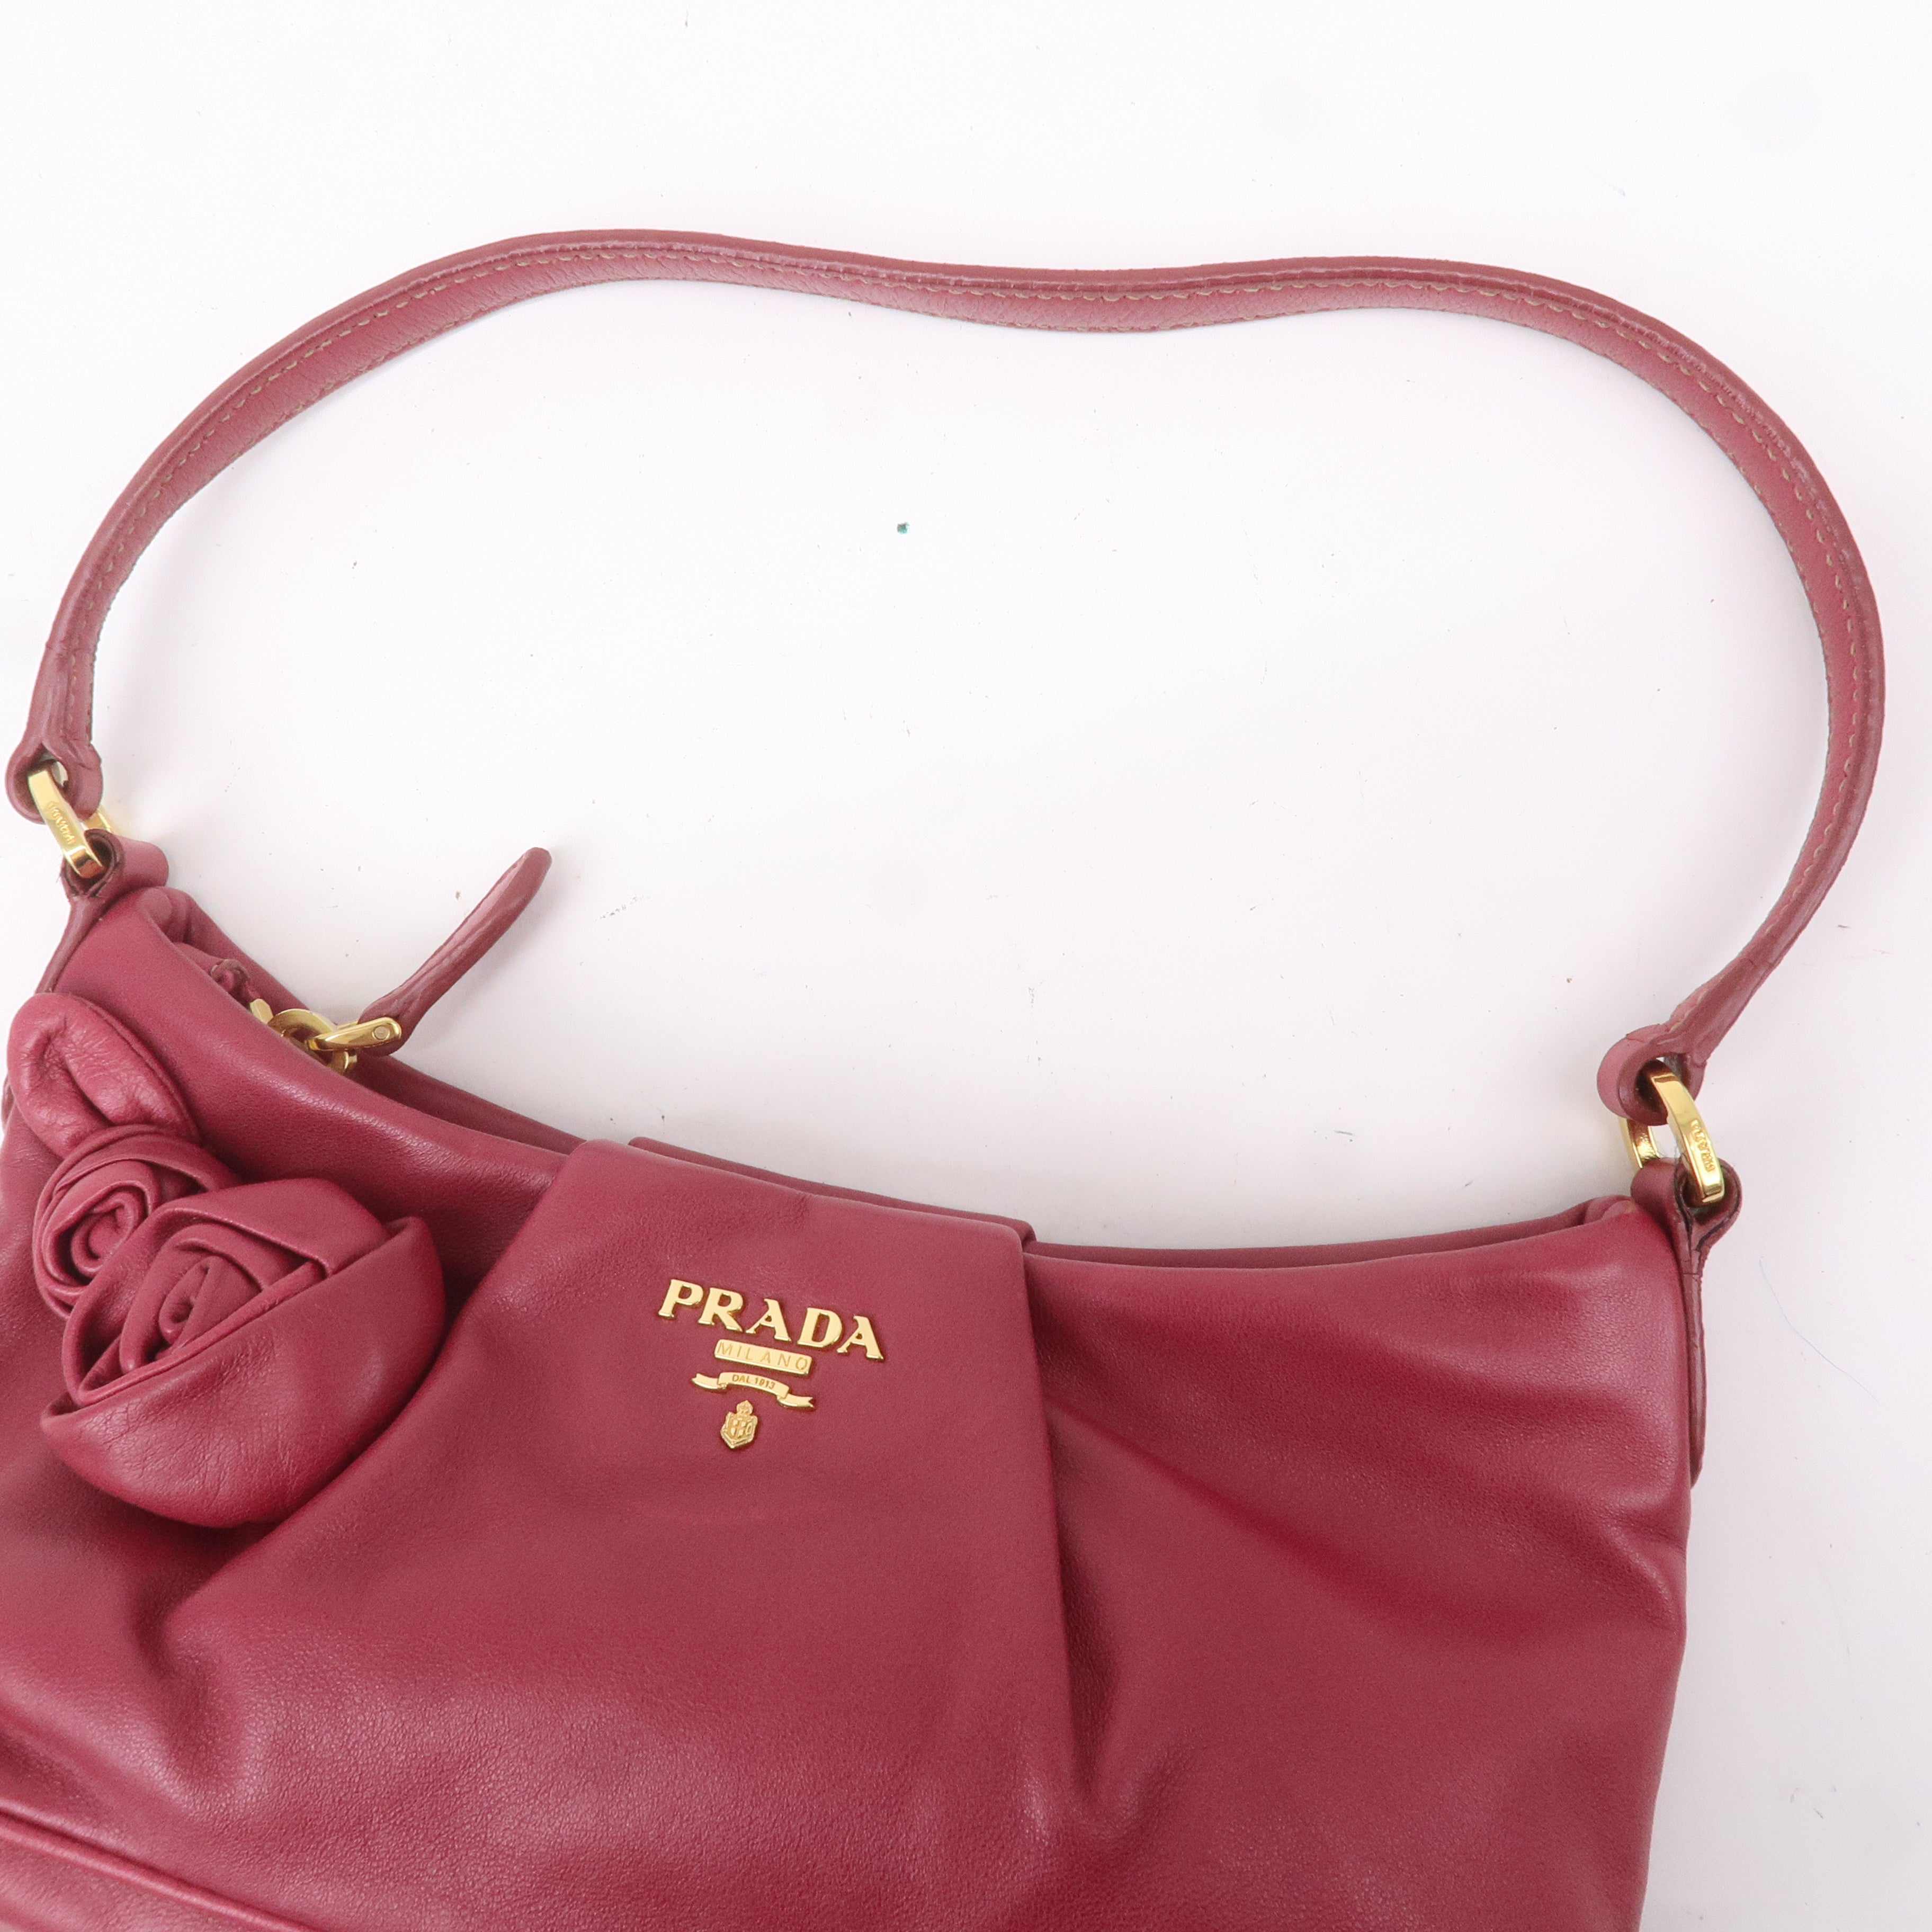 Prada label handbag – bright pink purse - clothing & accessories - by owner  - apparel sale - craigslist